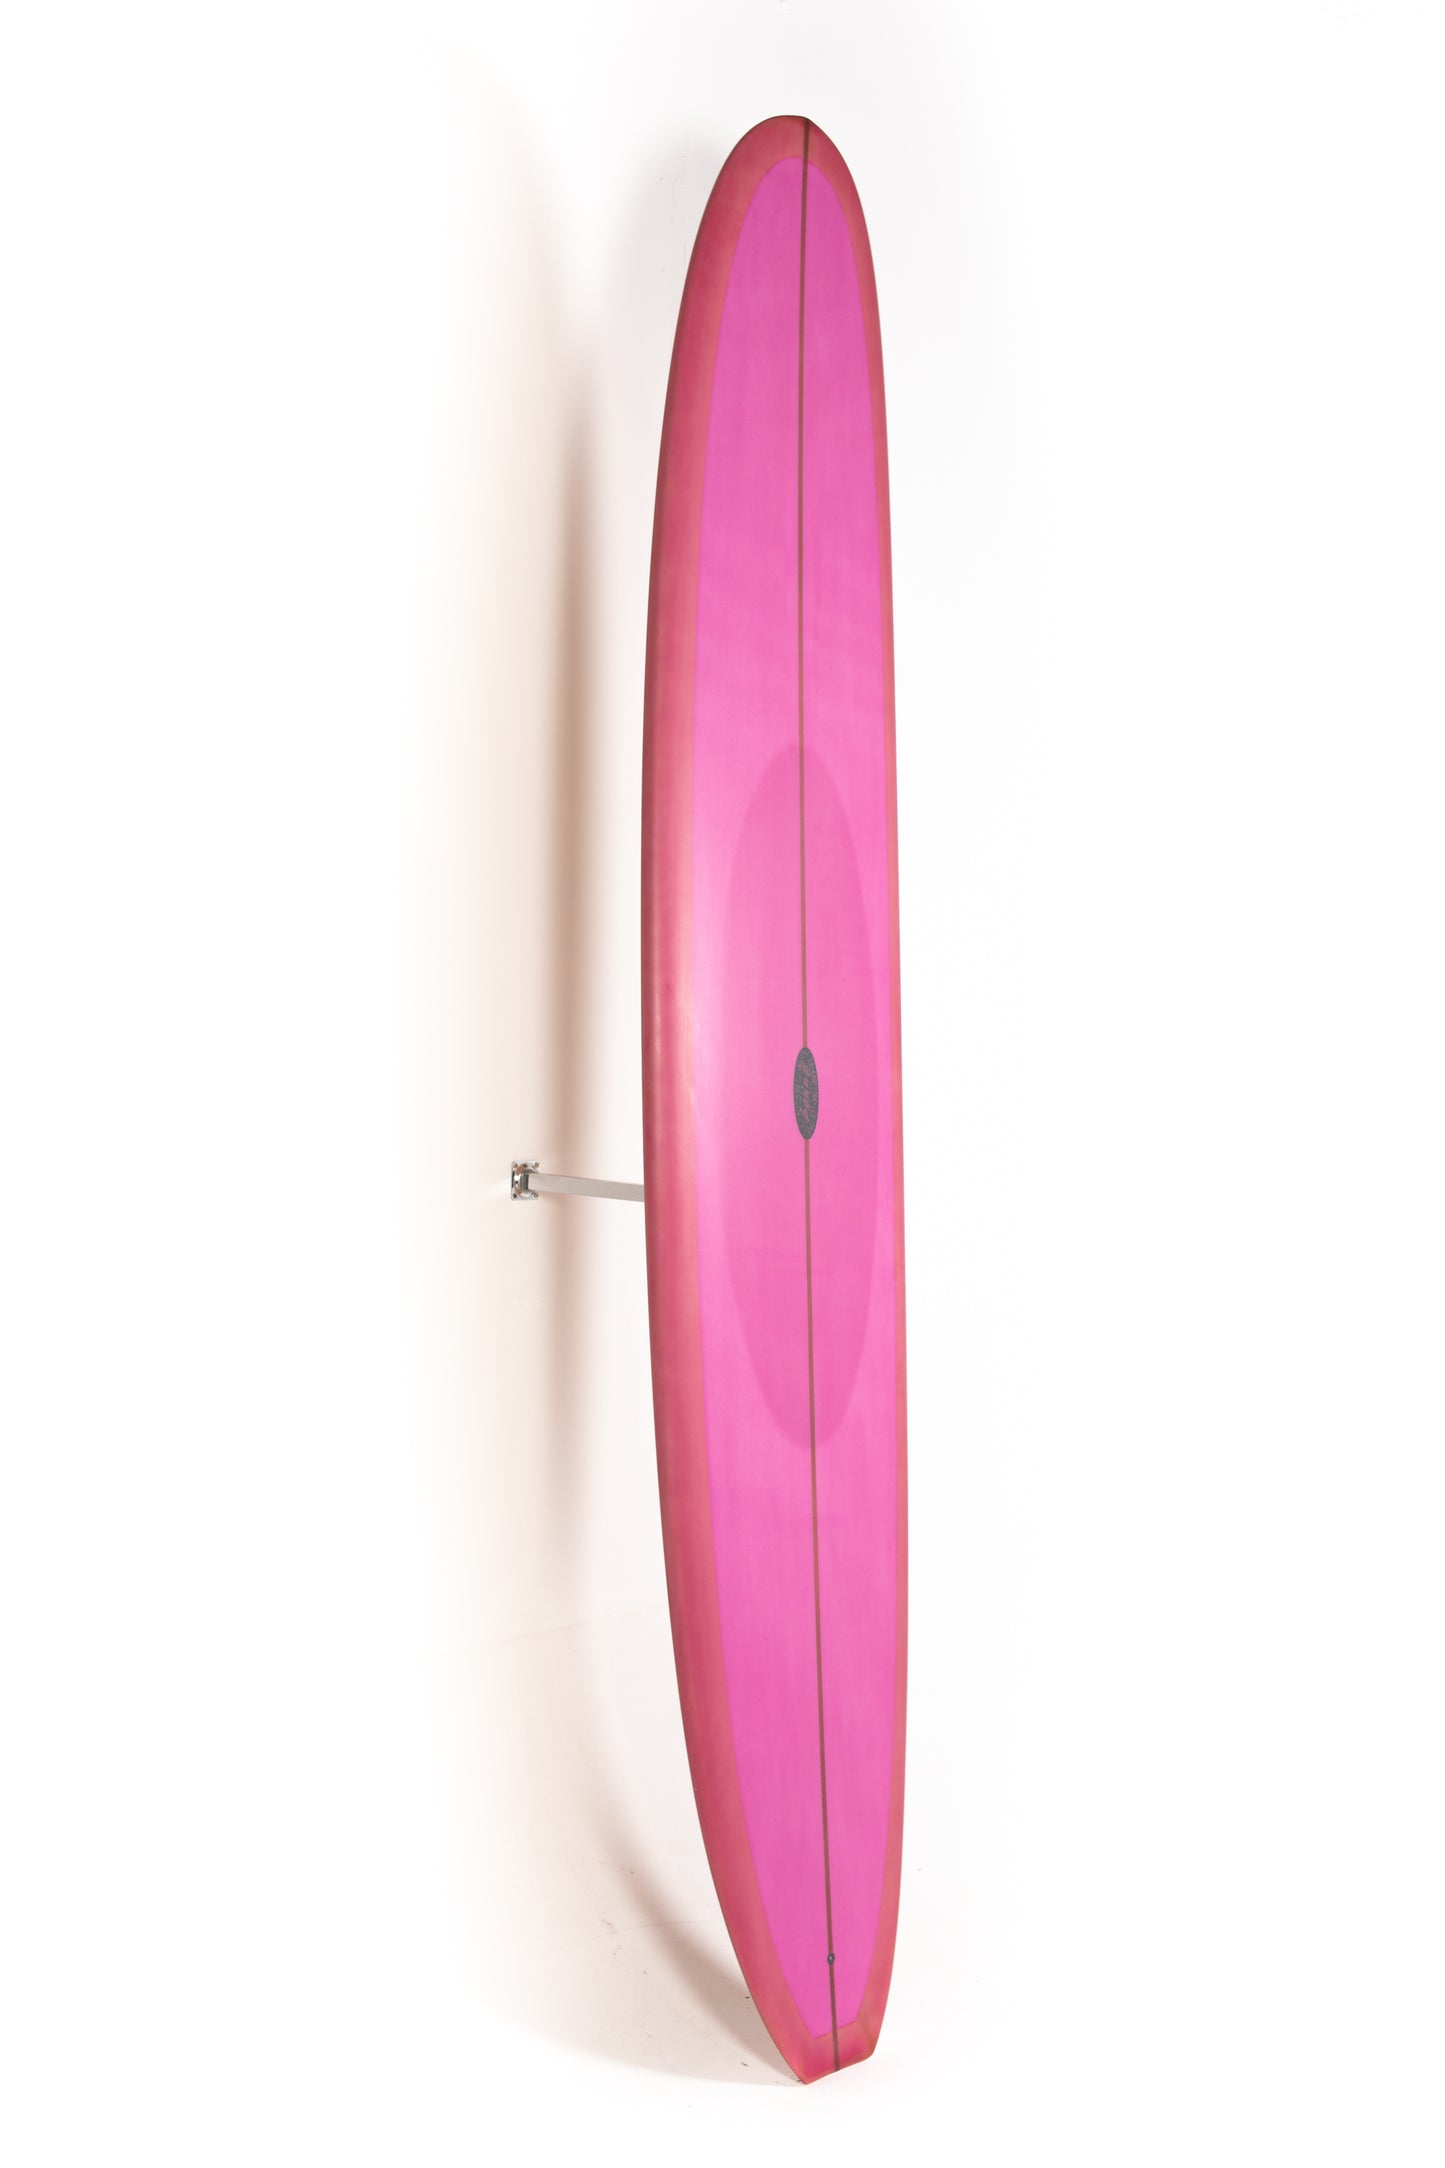 
                  
                    Pukas Surfboards - MAYFLOWER by Axel Lorentz -  9'2" x 22 3/4 x 3 x 73.33L - AX09729
                  
                